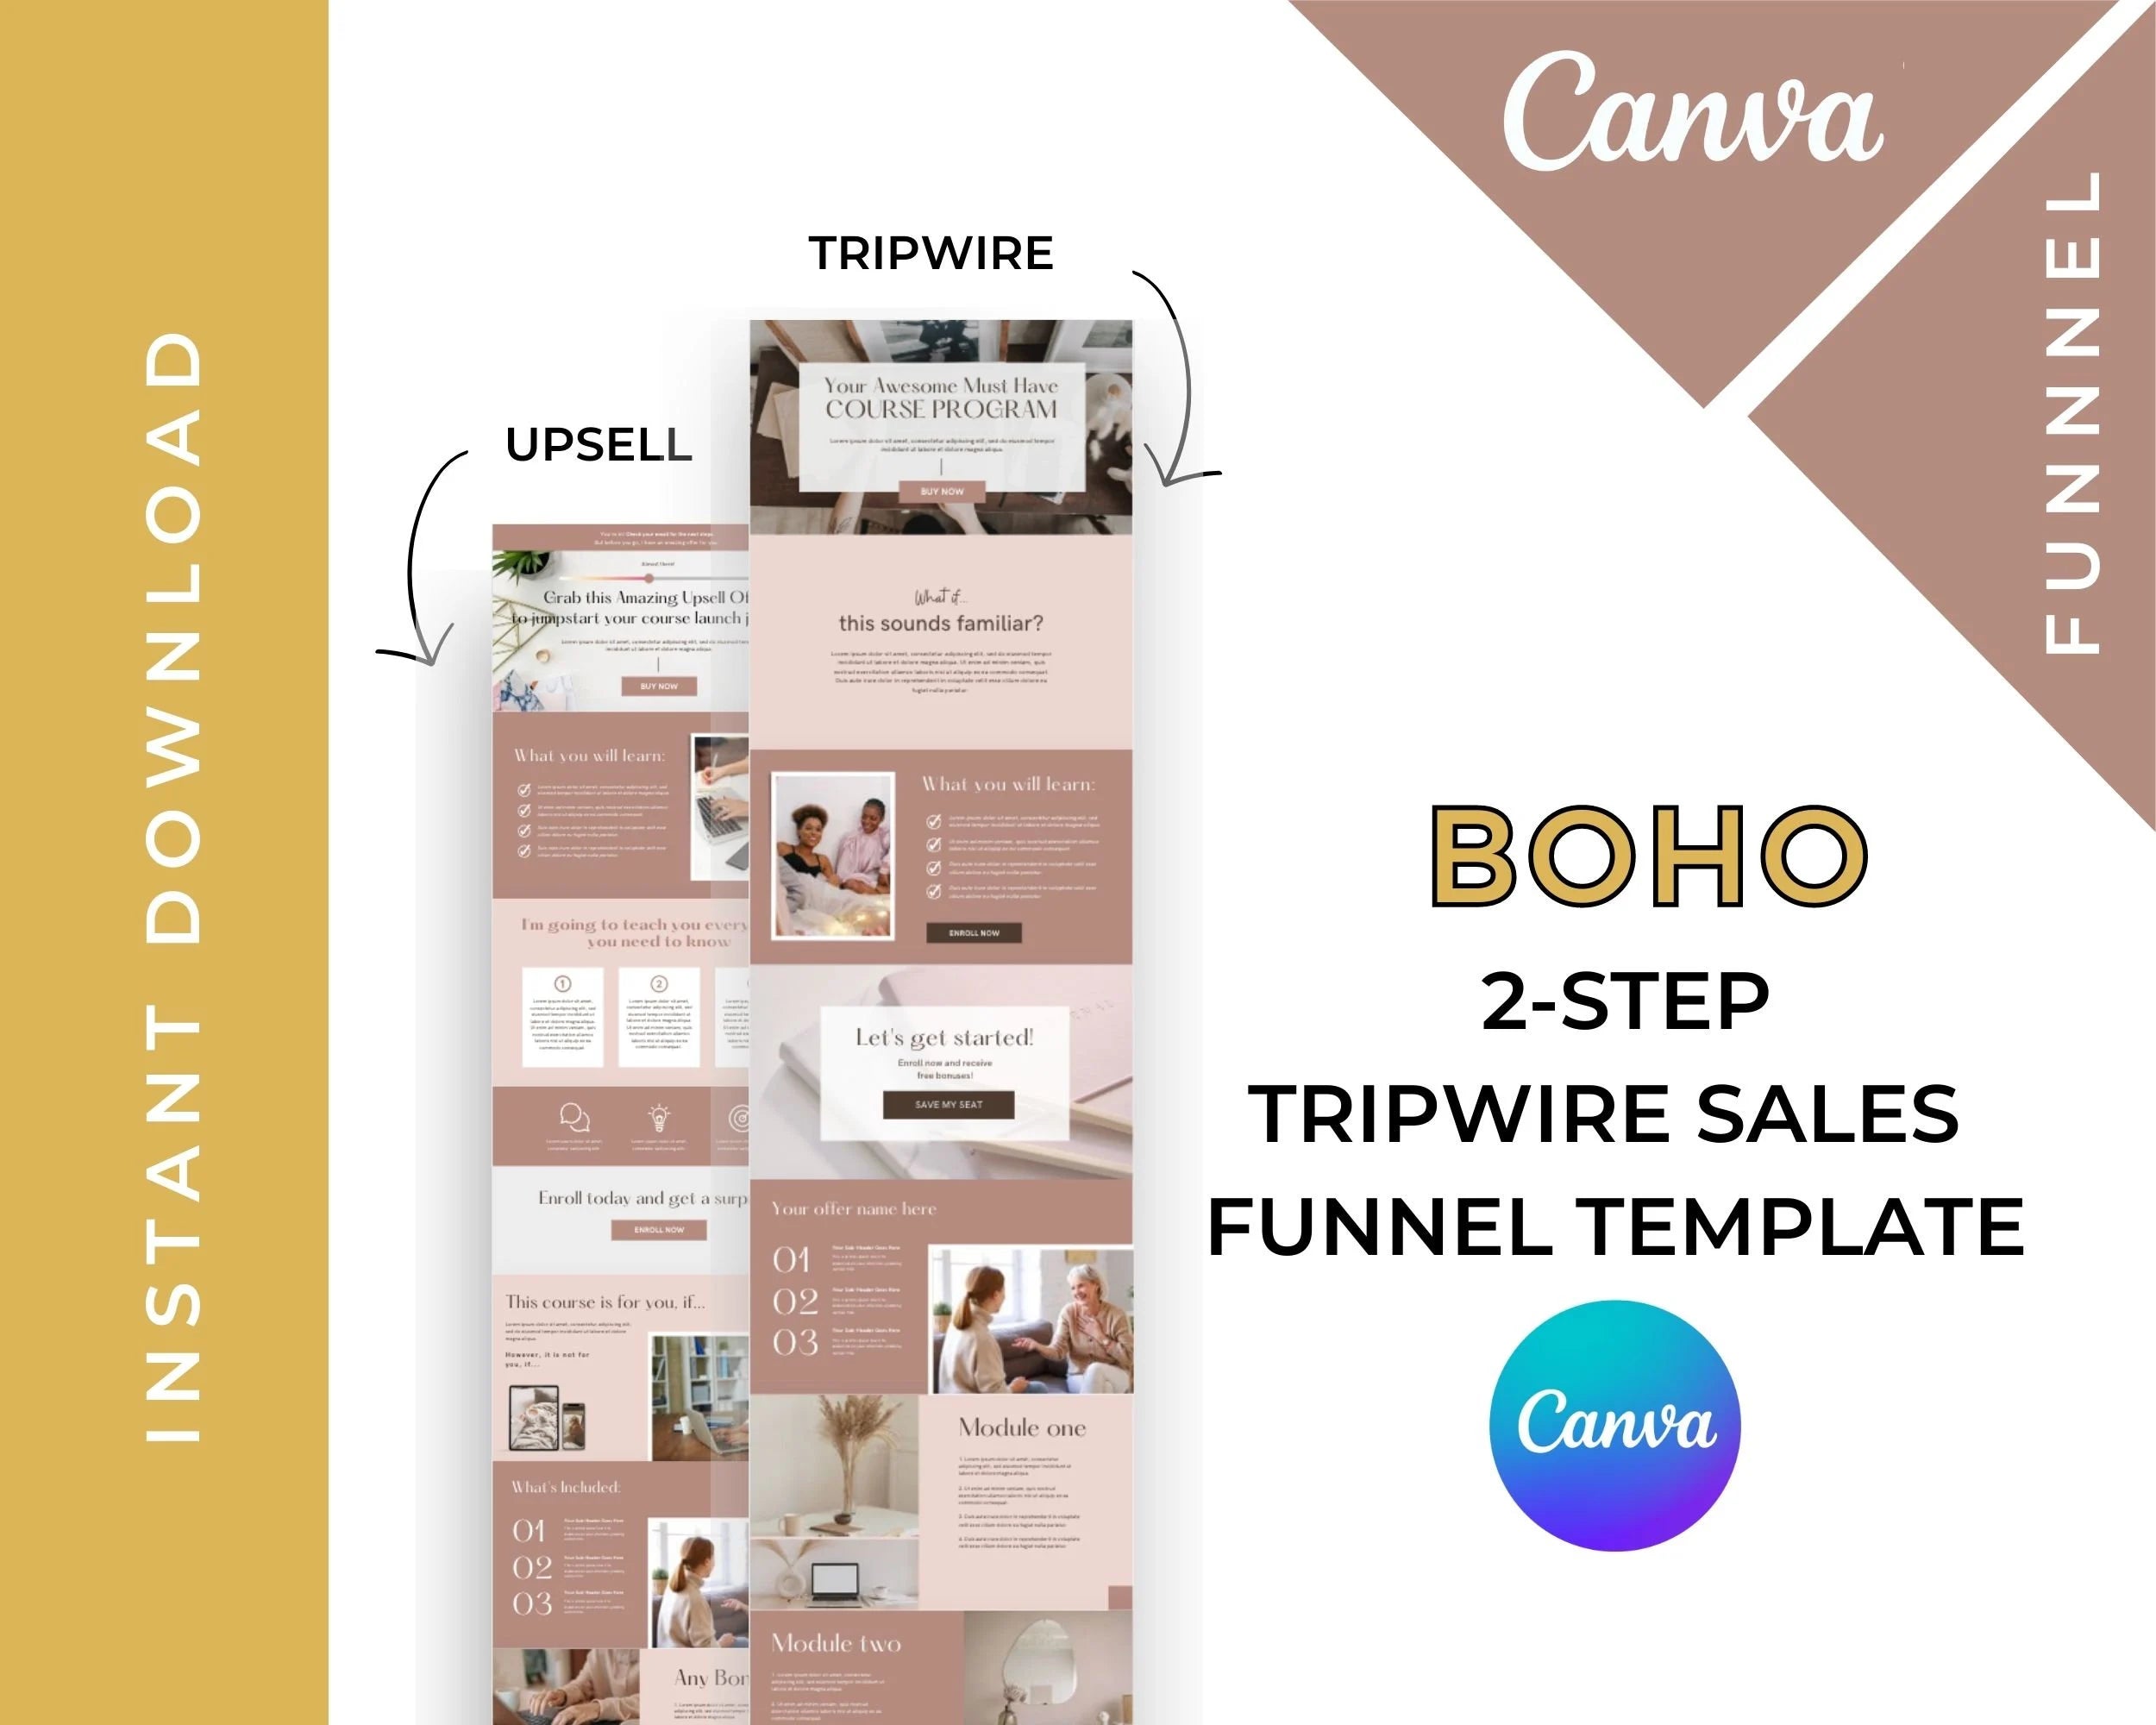 Boho 2-Step Tripwire Sales Funnel in Canva